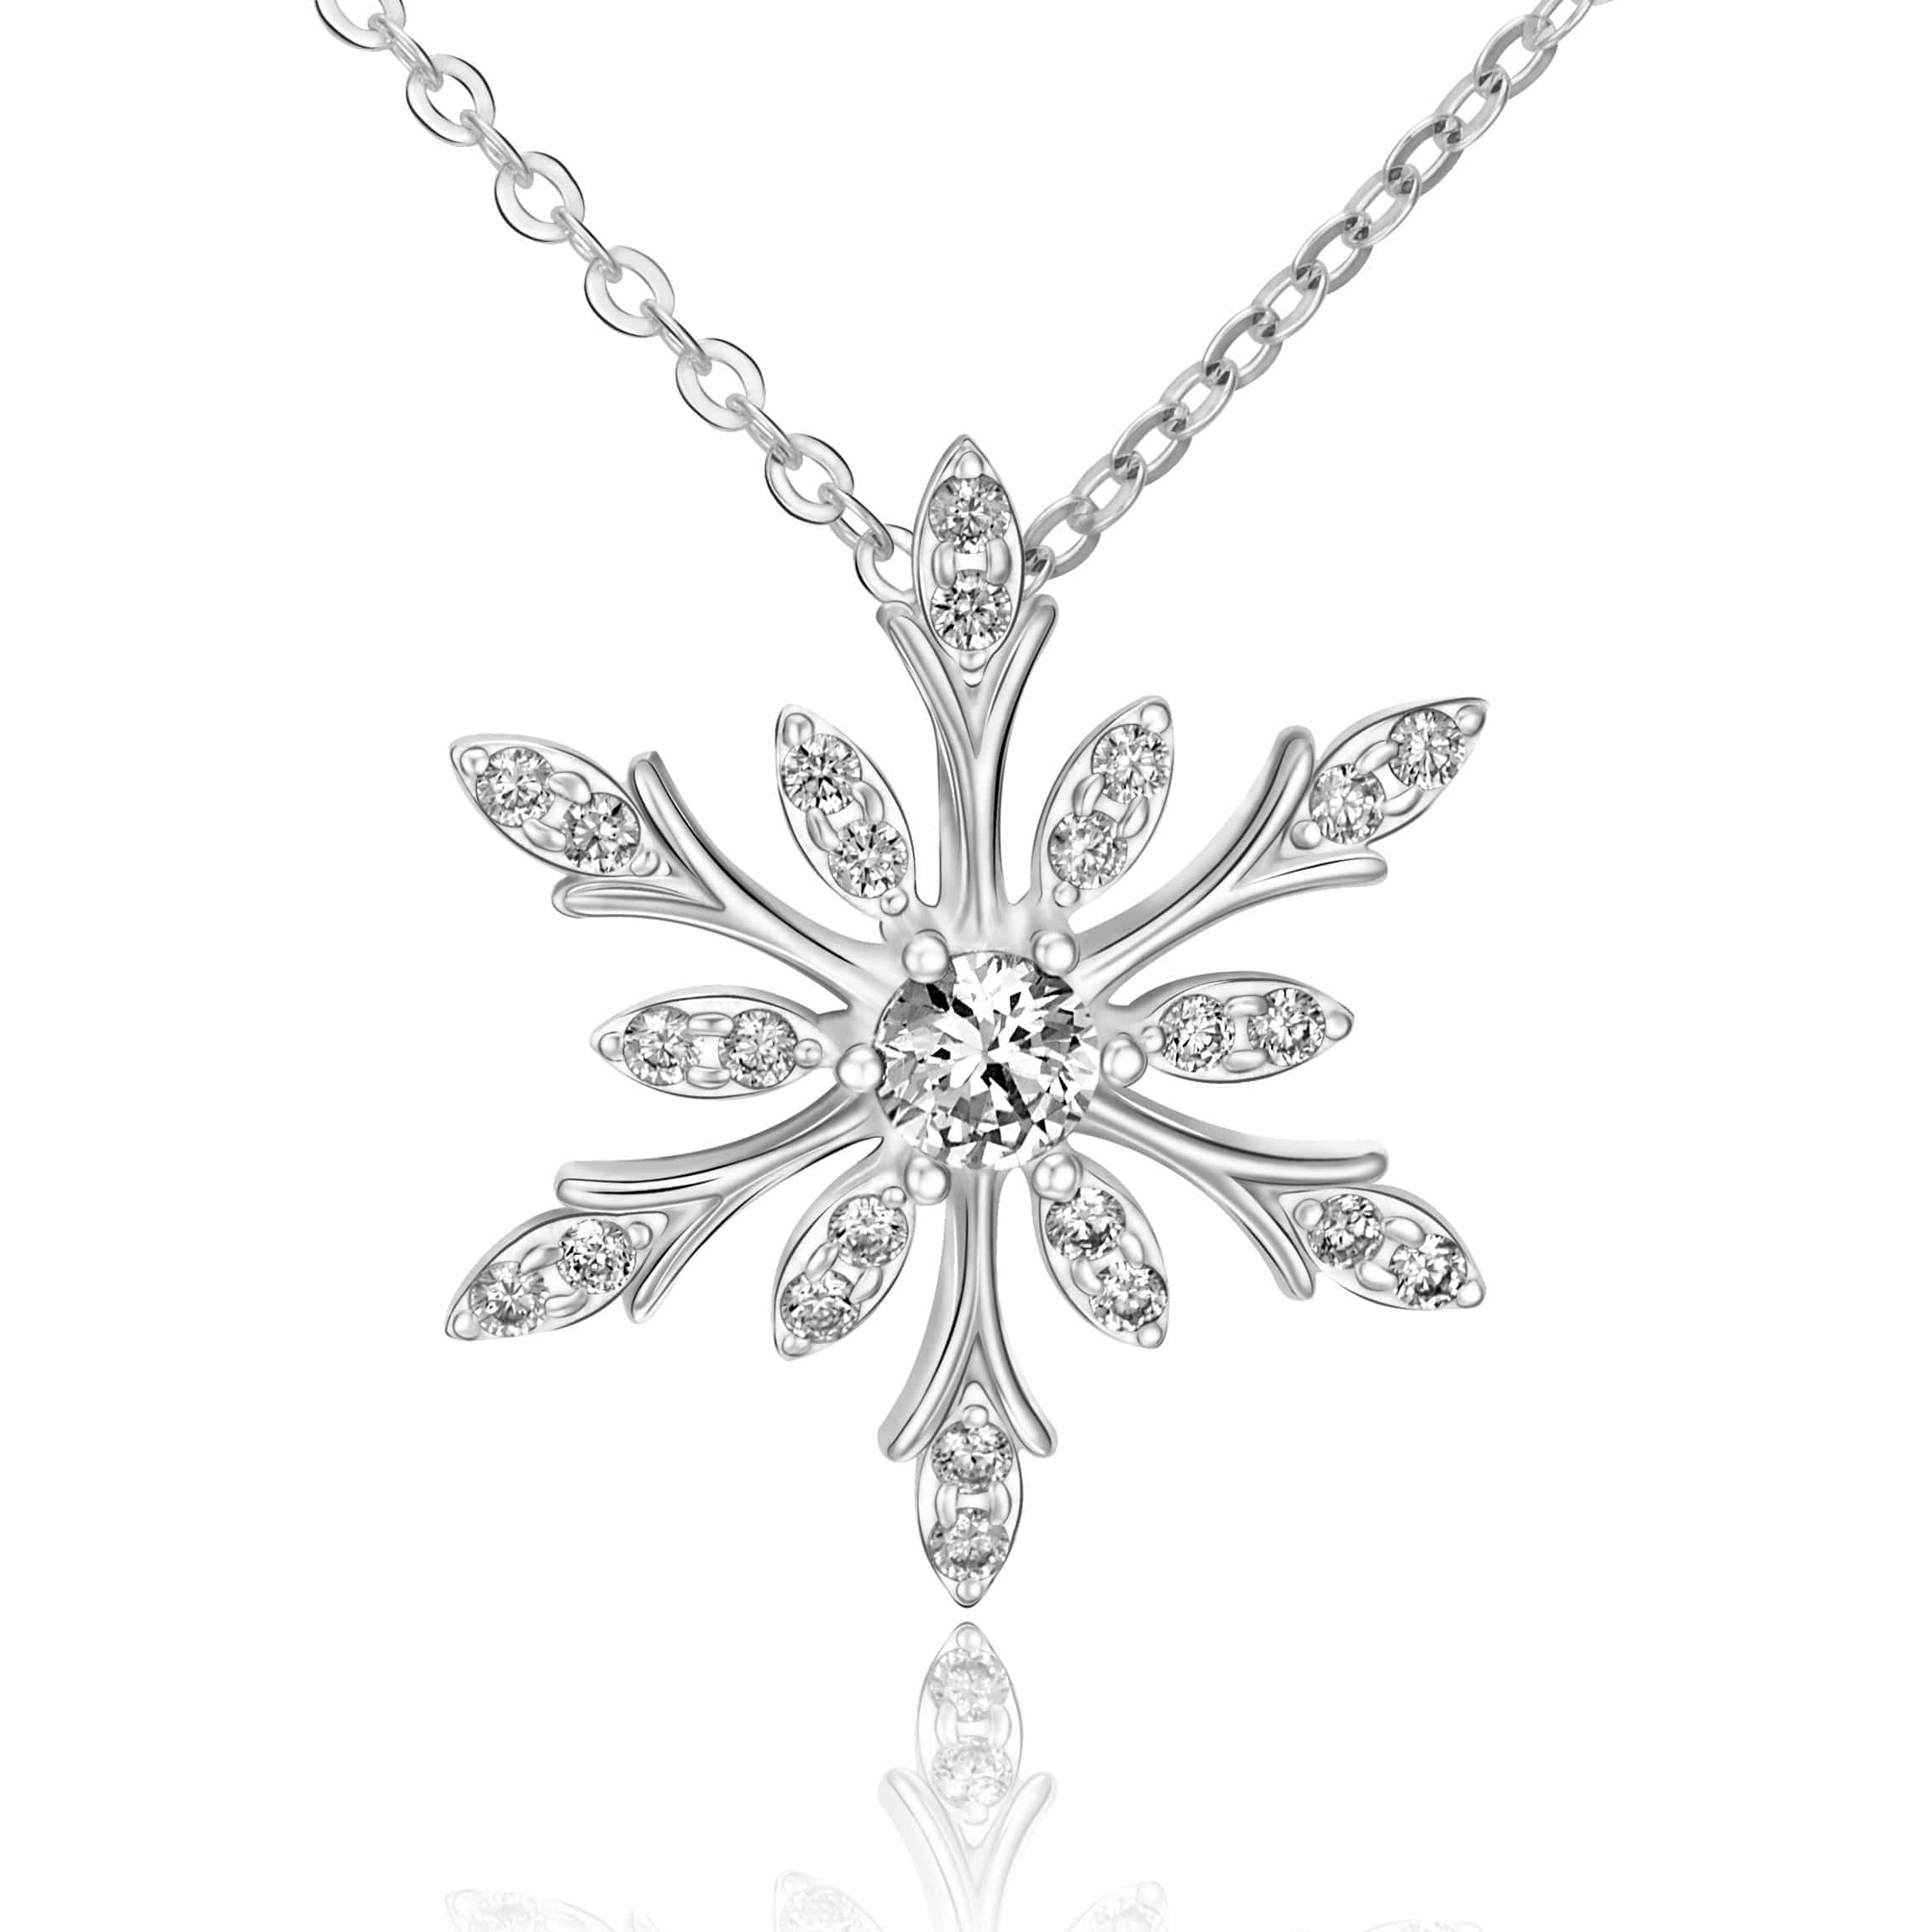 Sterling Silver Necklace - Eleganzia Jewelry